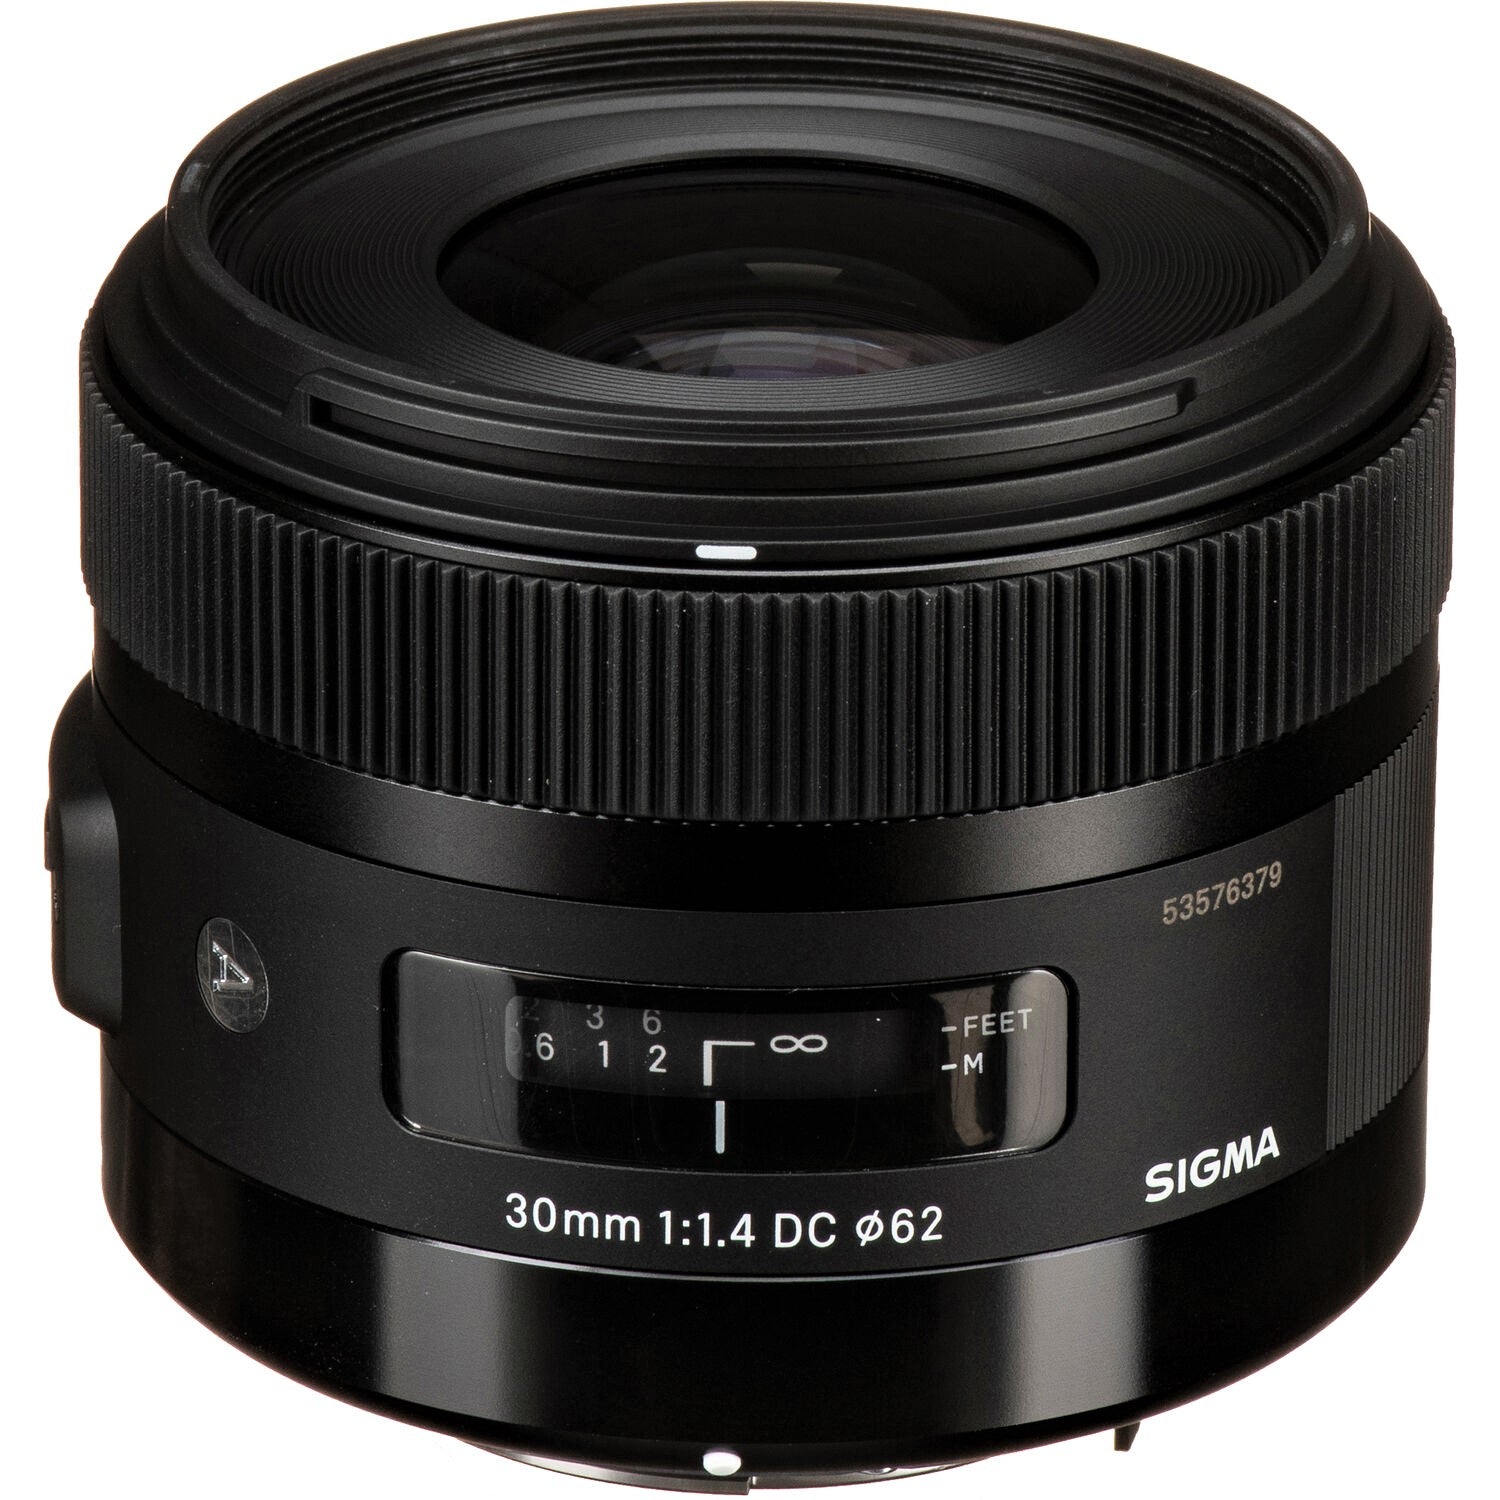 Sigma 30mm F1.4 DC HSM Art Lens for Pentax K